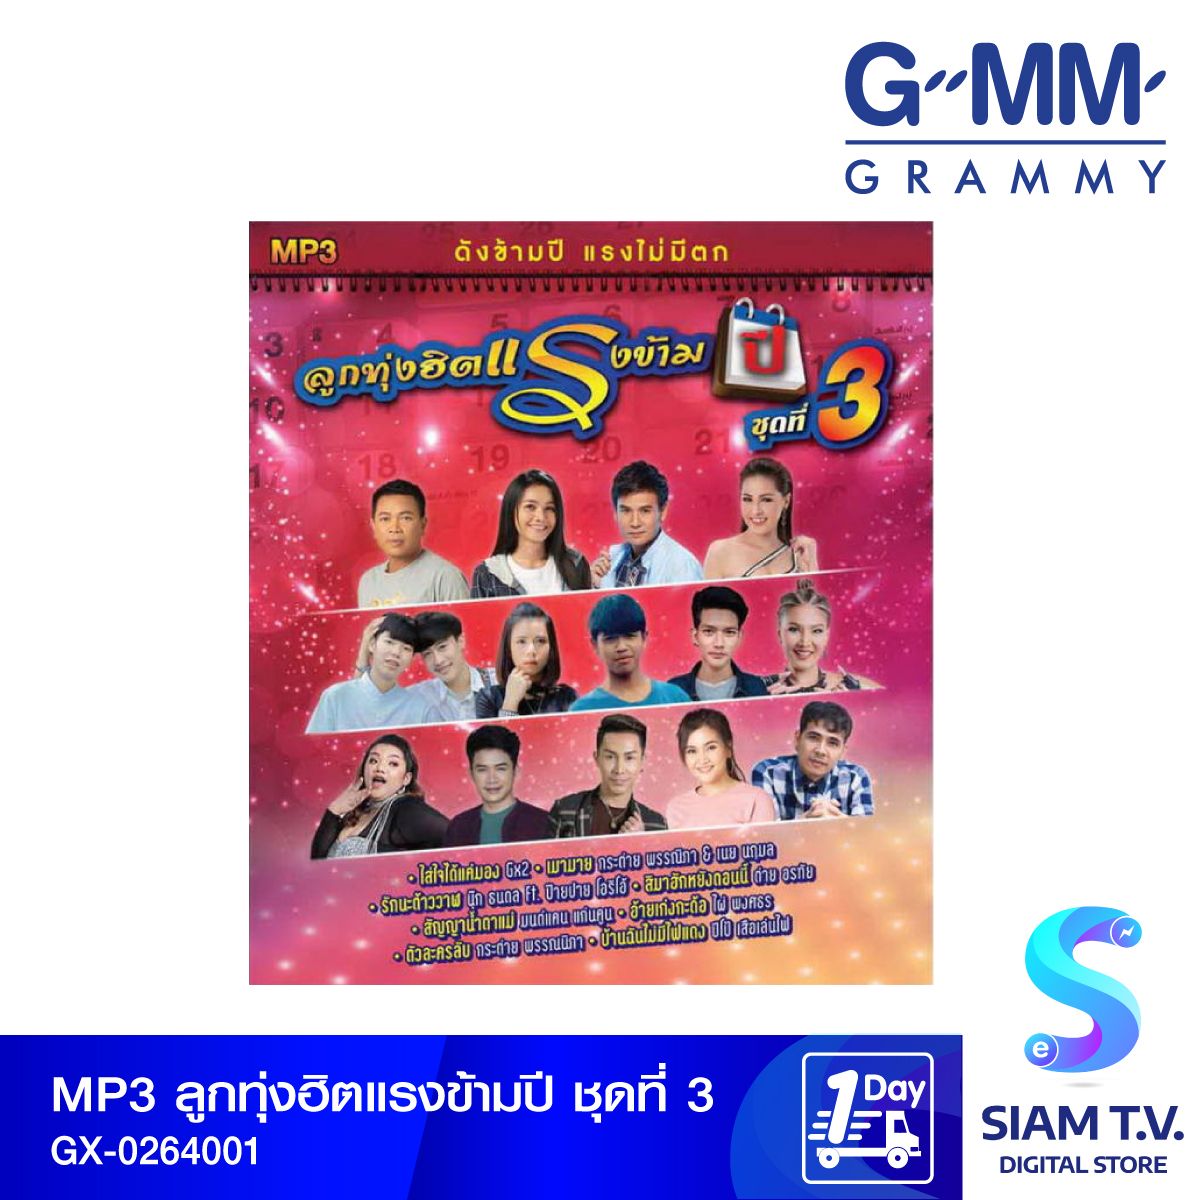 GMM GRAMMY MP3ลูกทุ่งฮิตแรงข้ามปี ชุดที่3